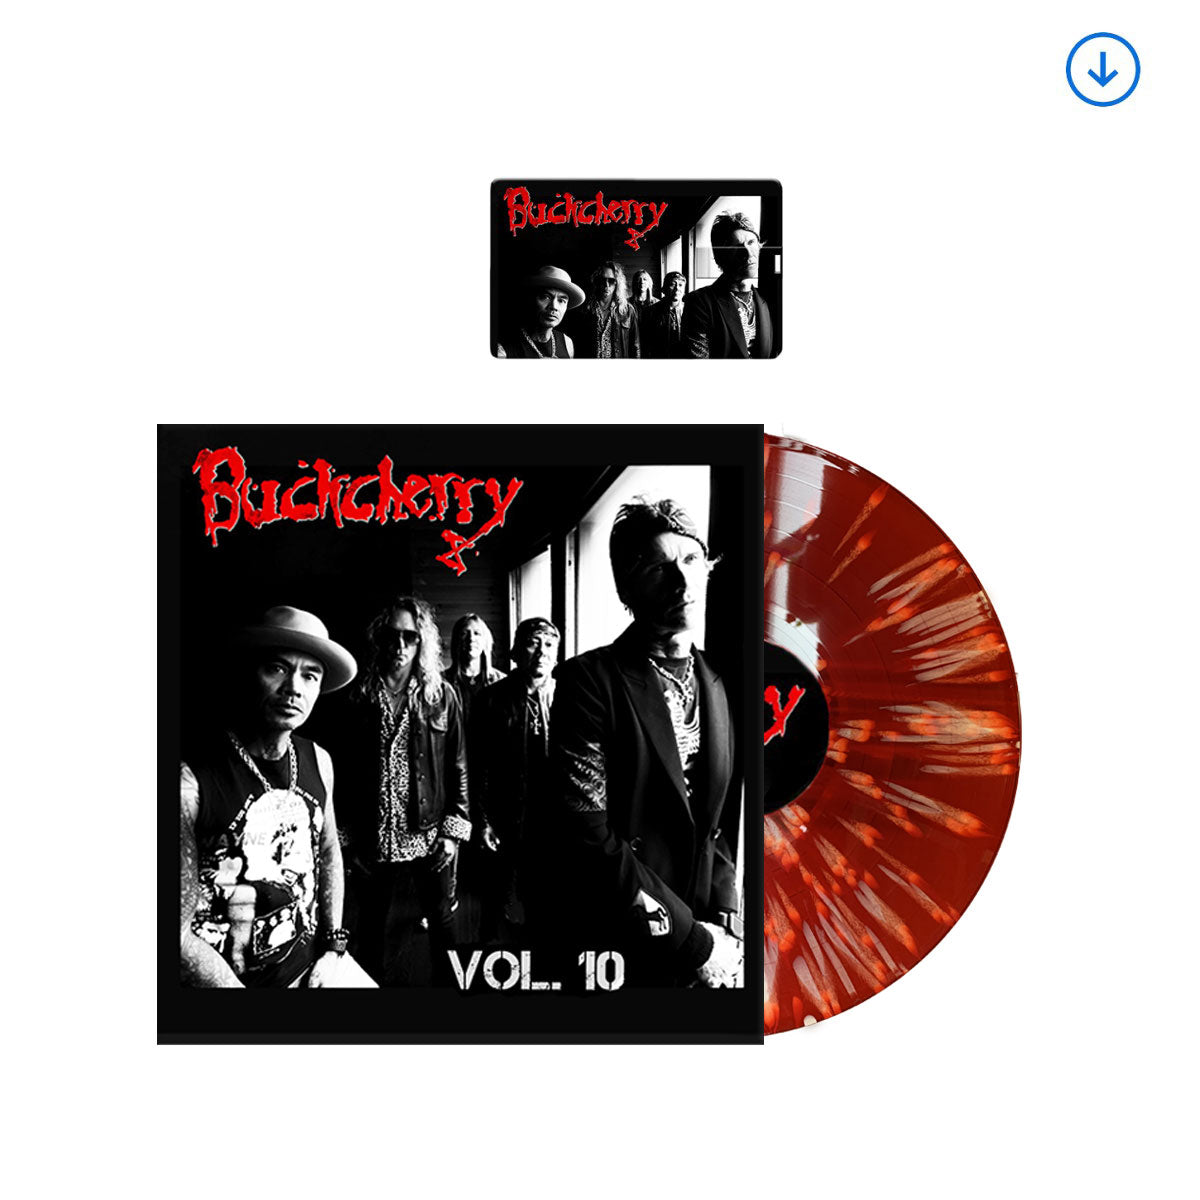 Buckcherry "Vol. 10" Red w/ White Splatter Vinyl, Credit Card Shaped USB